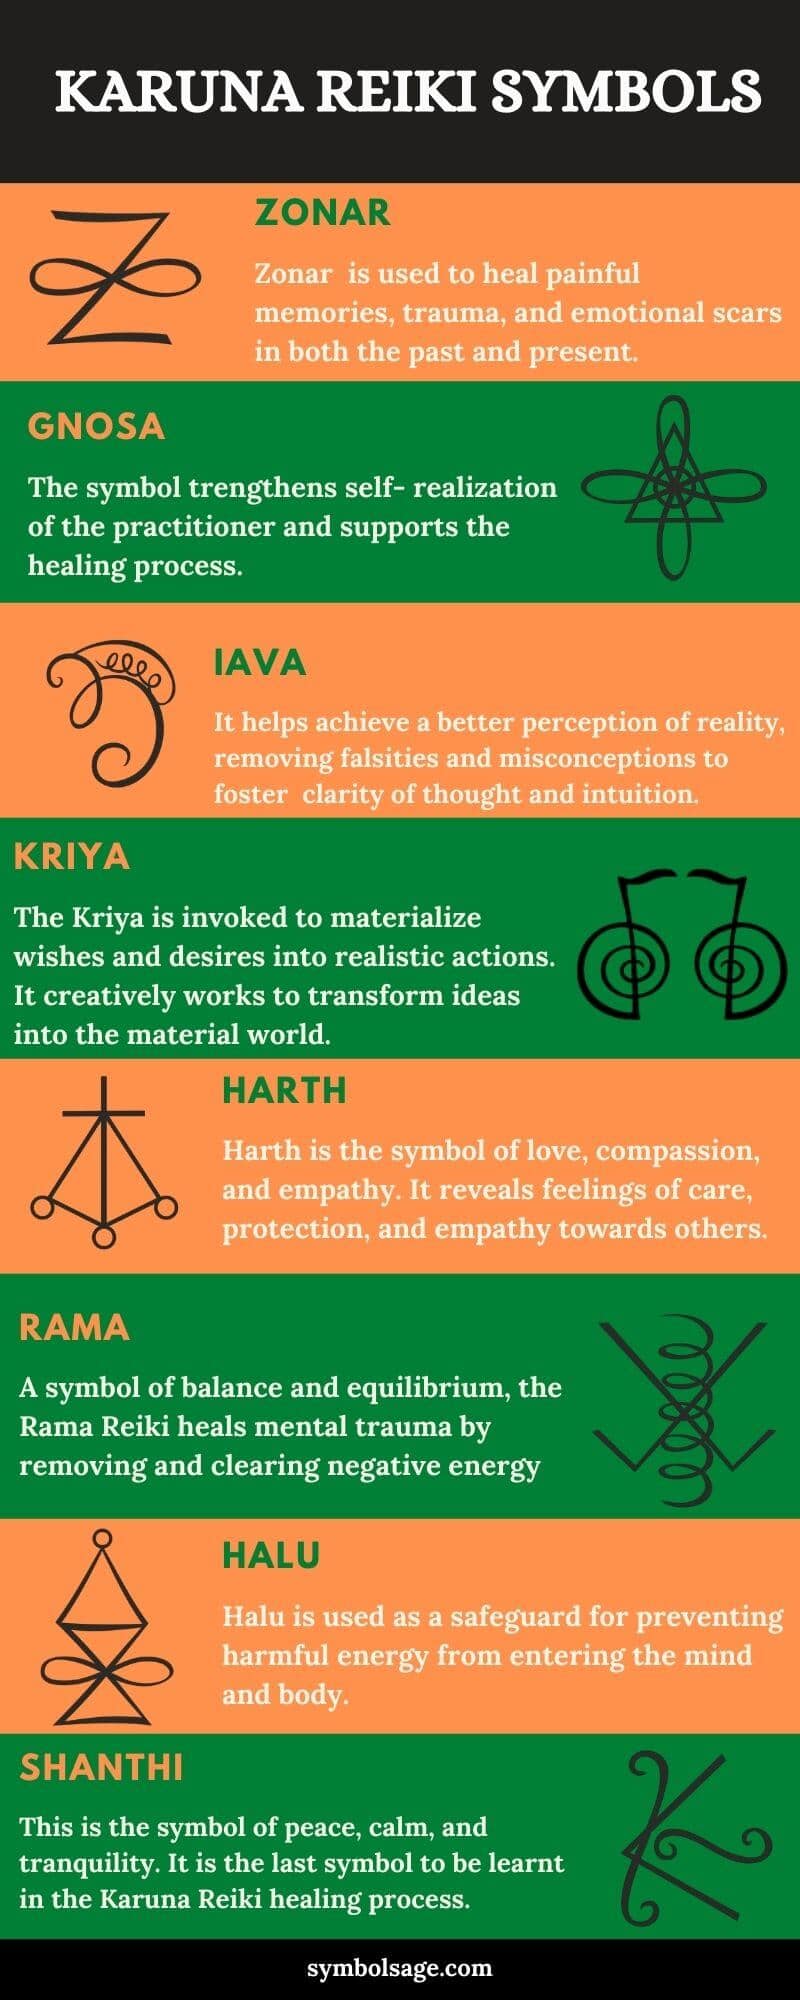 Karuna reiki symbols meaning